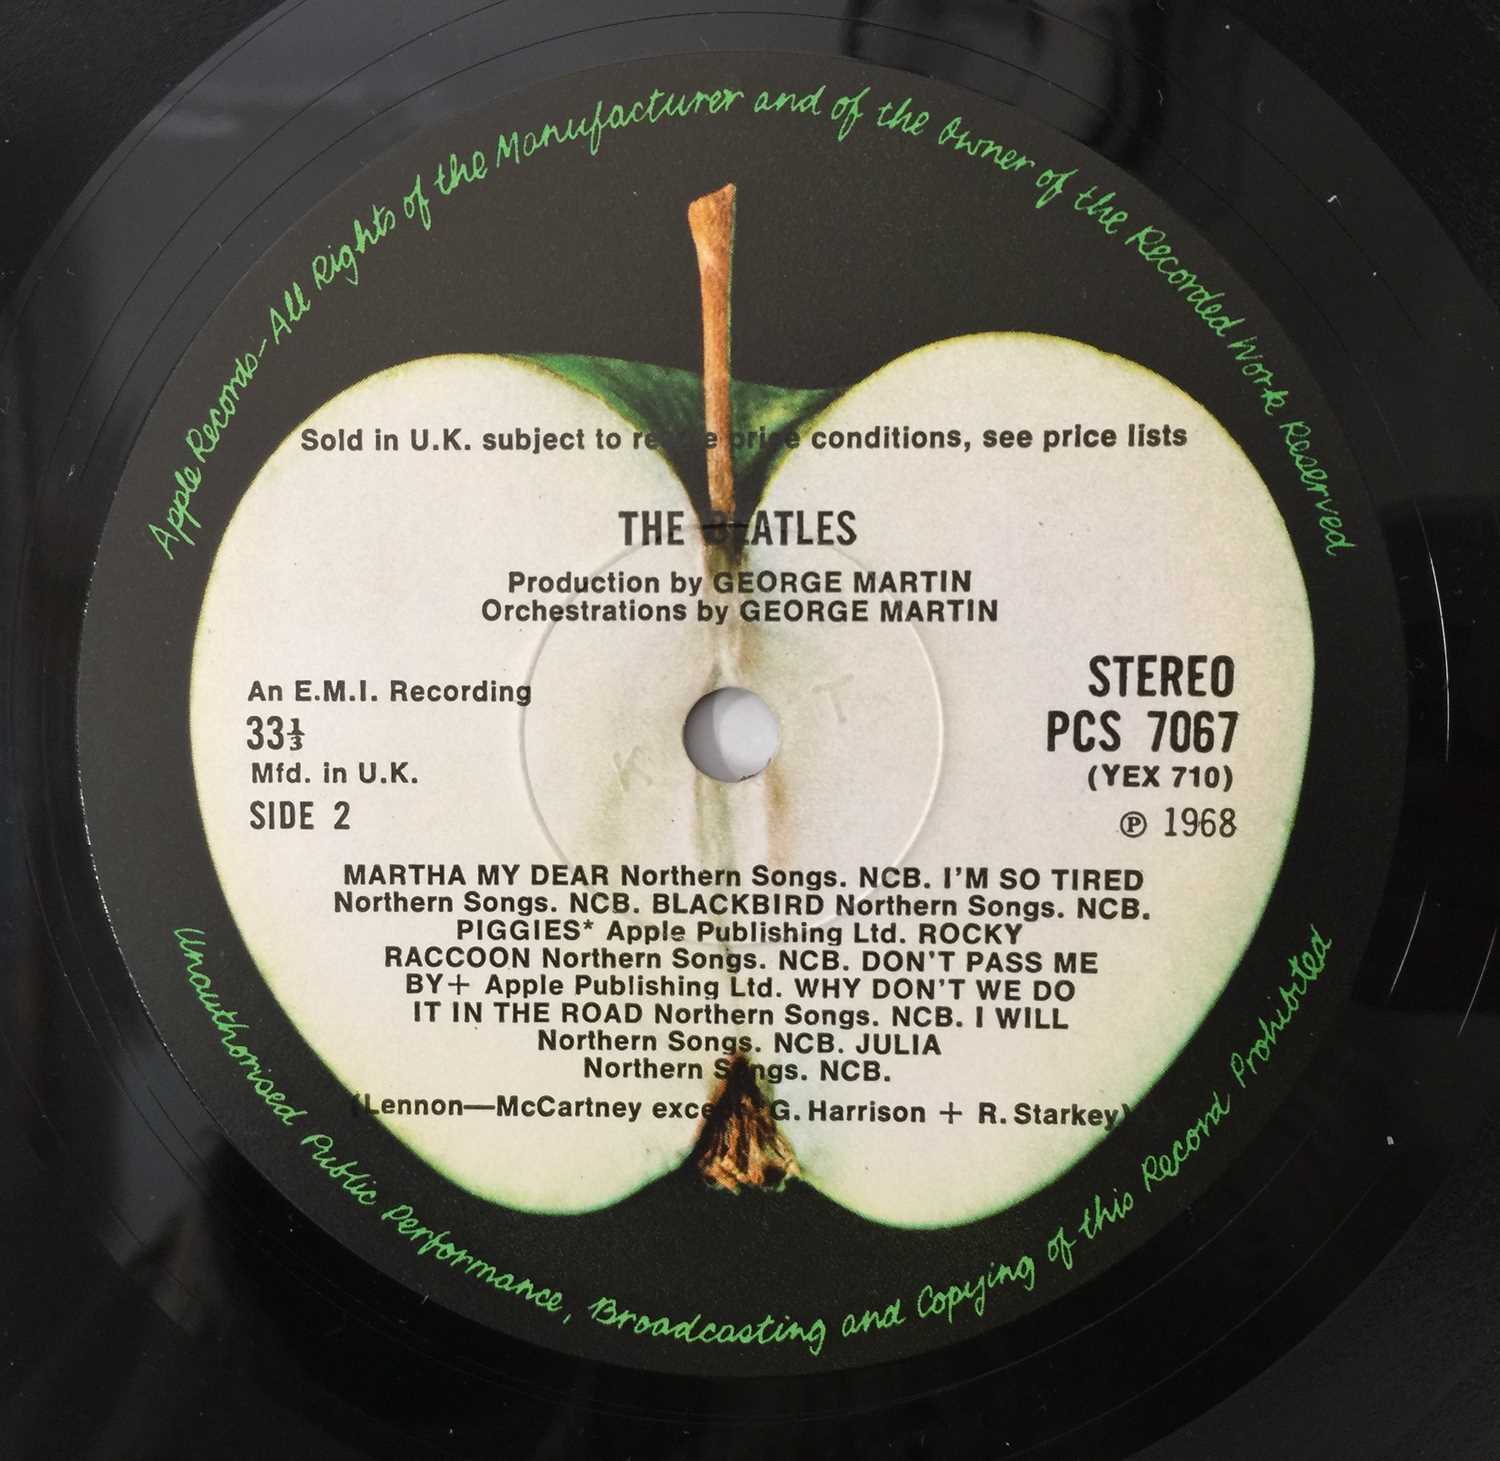 THE BEATLES - WHITE ALBUM LP (UK STEREO TOP LOADING COPY - PCS 7067/8) - Image 8 of 10